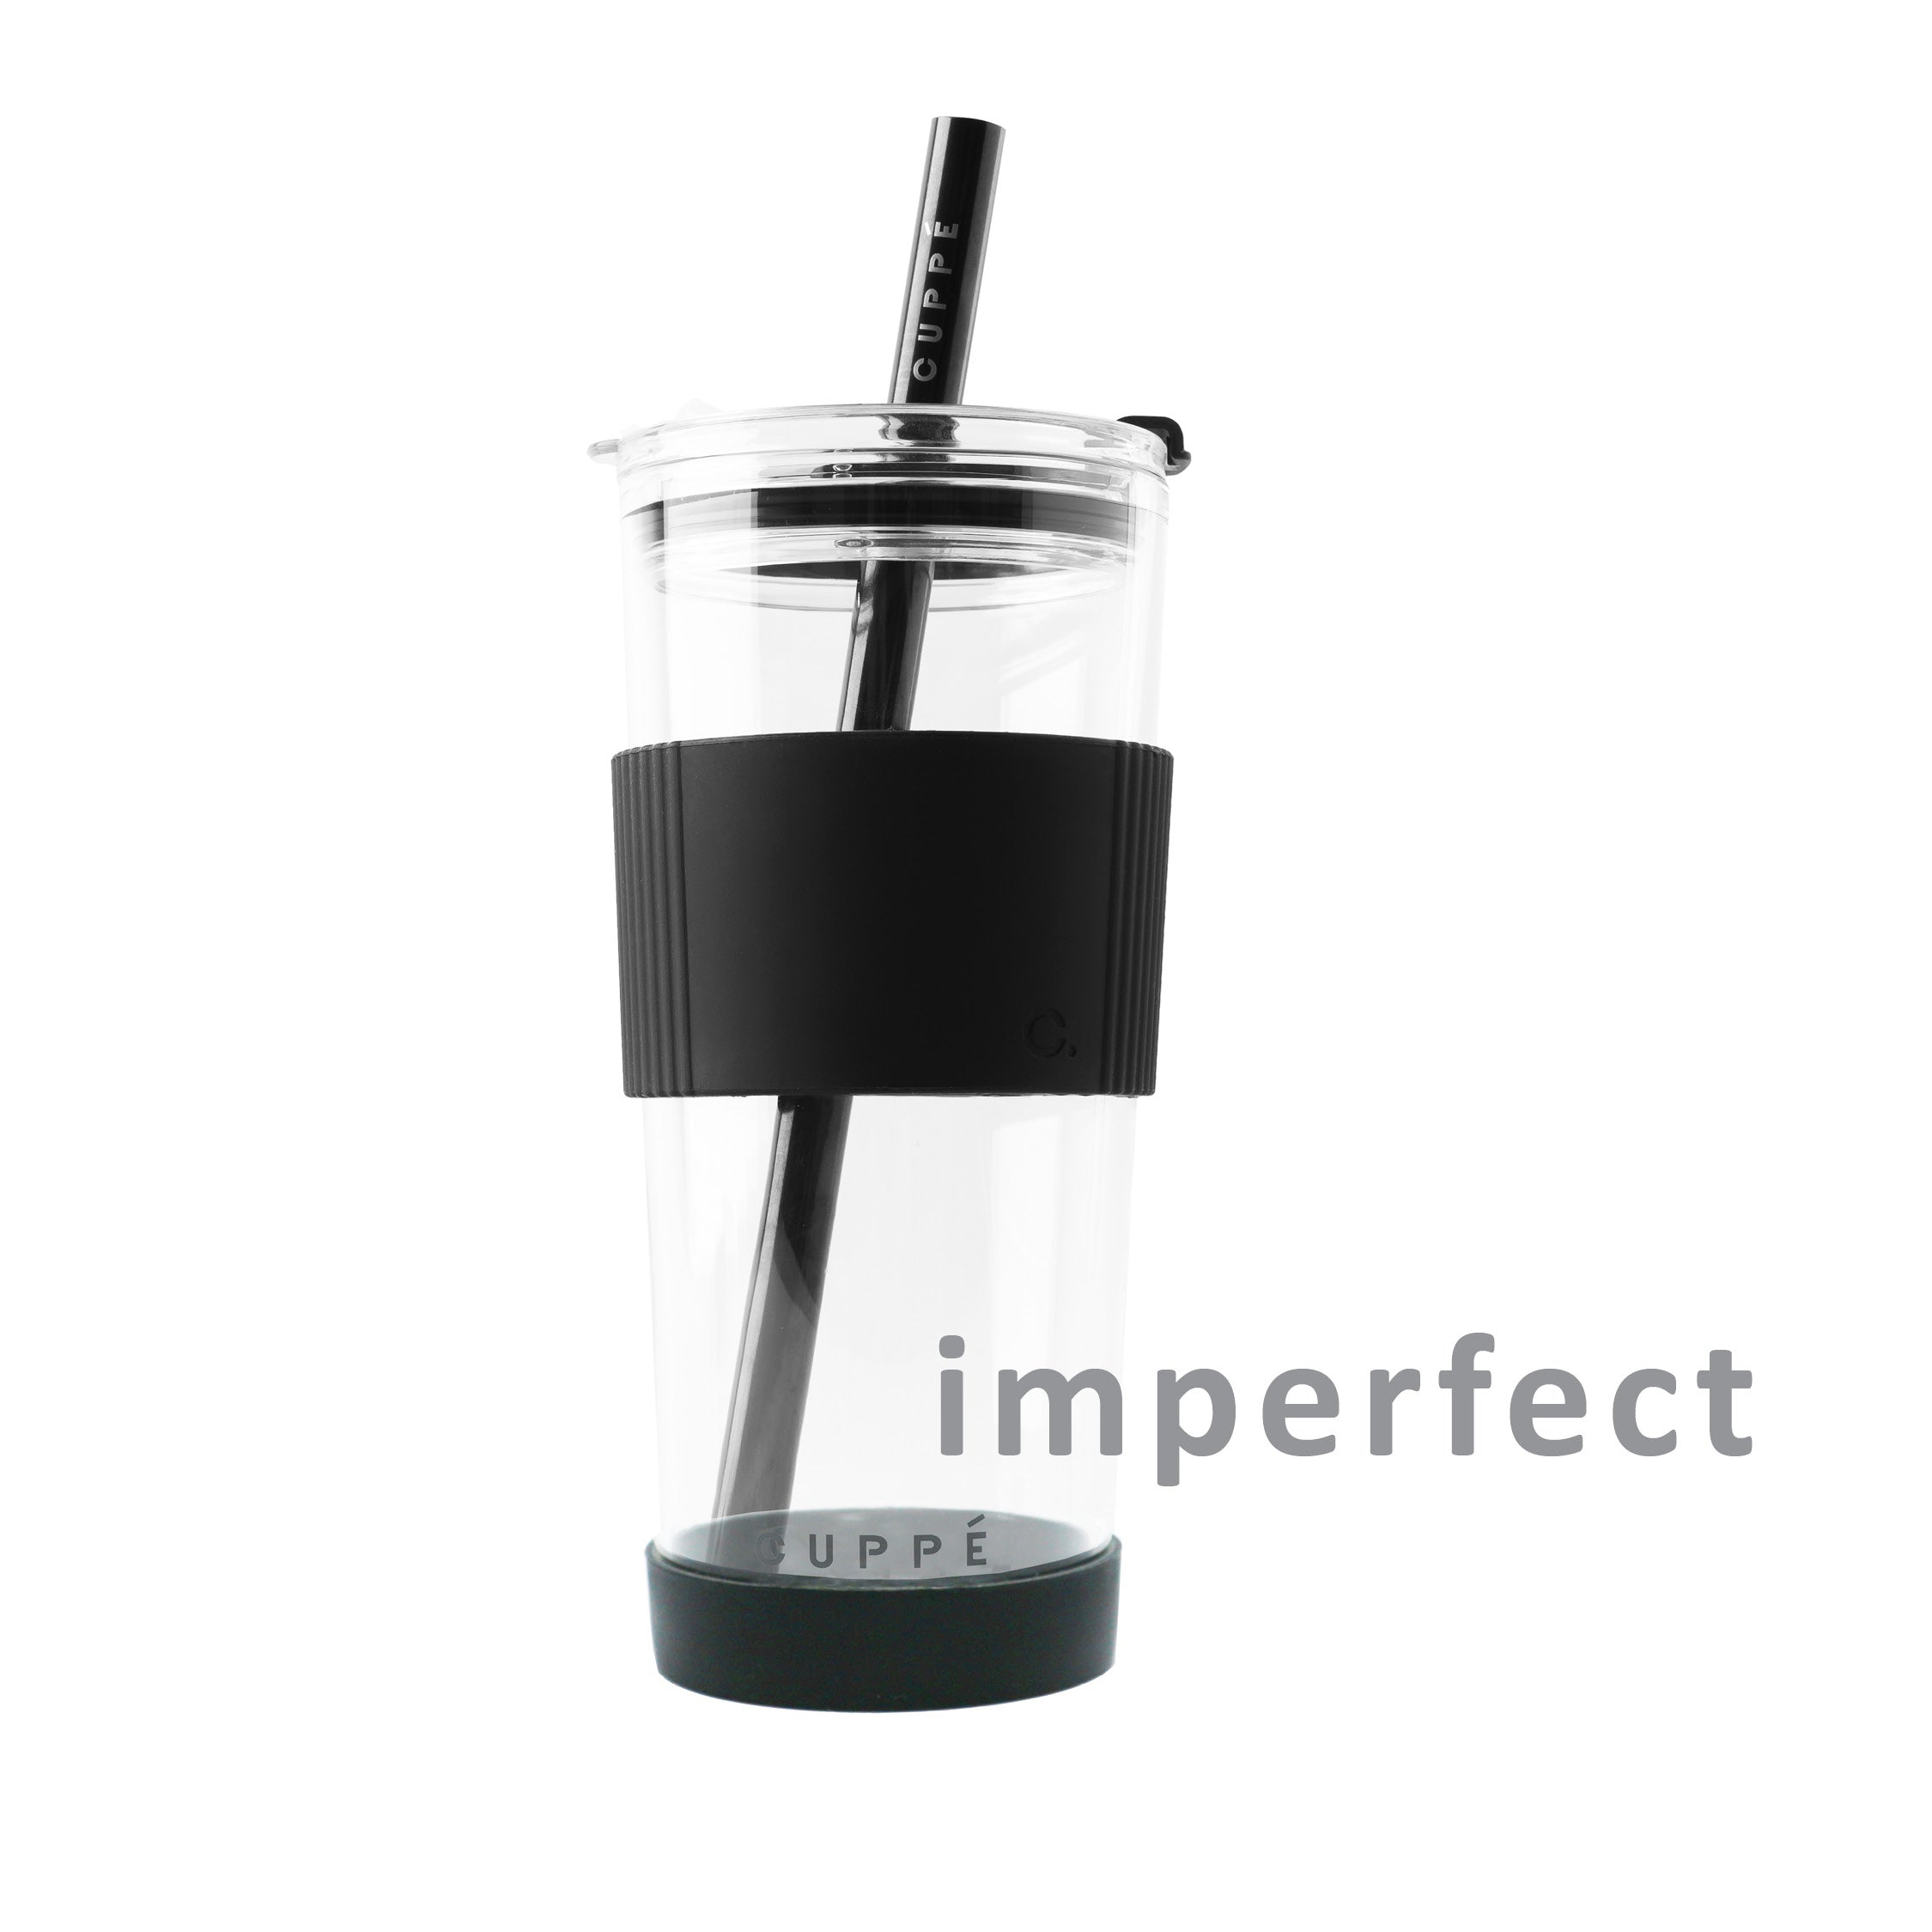 Imperfect Bubble Tea Tumbler Set - Classic 700ml